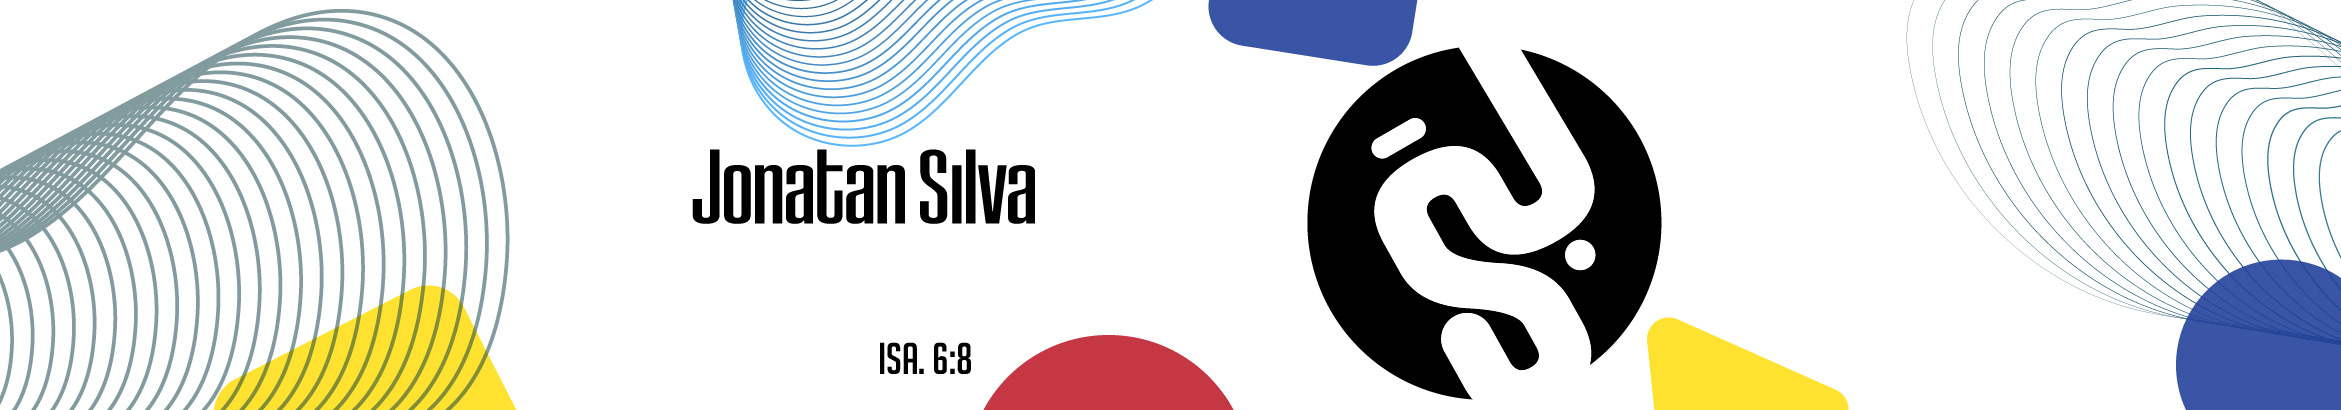 Jonatan Silva's profile banner